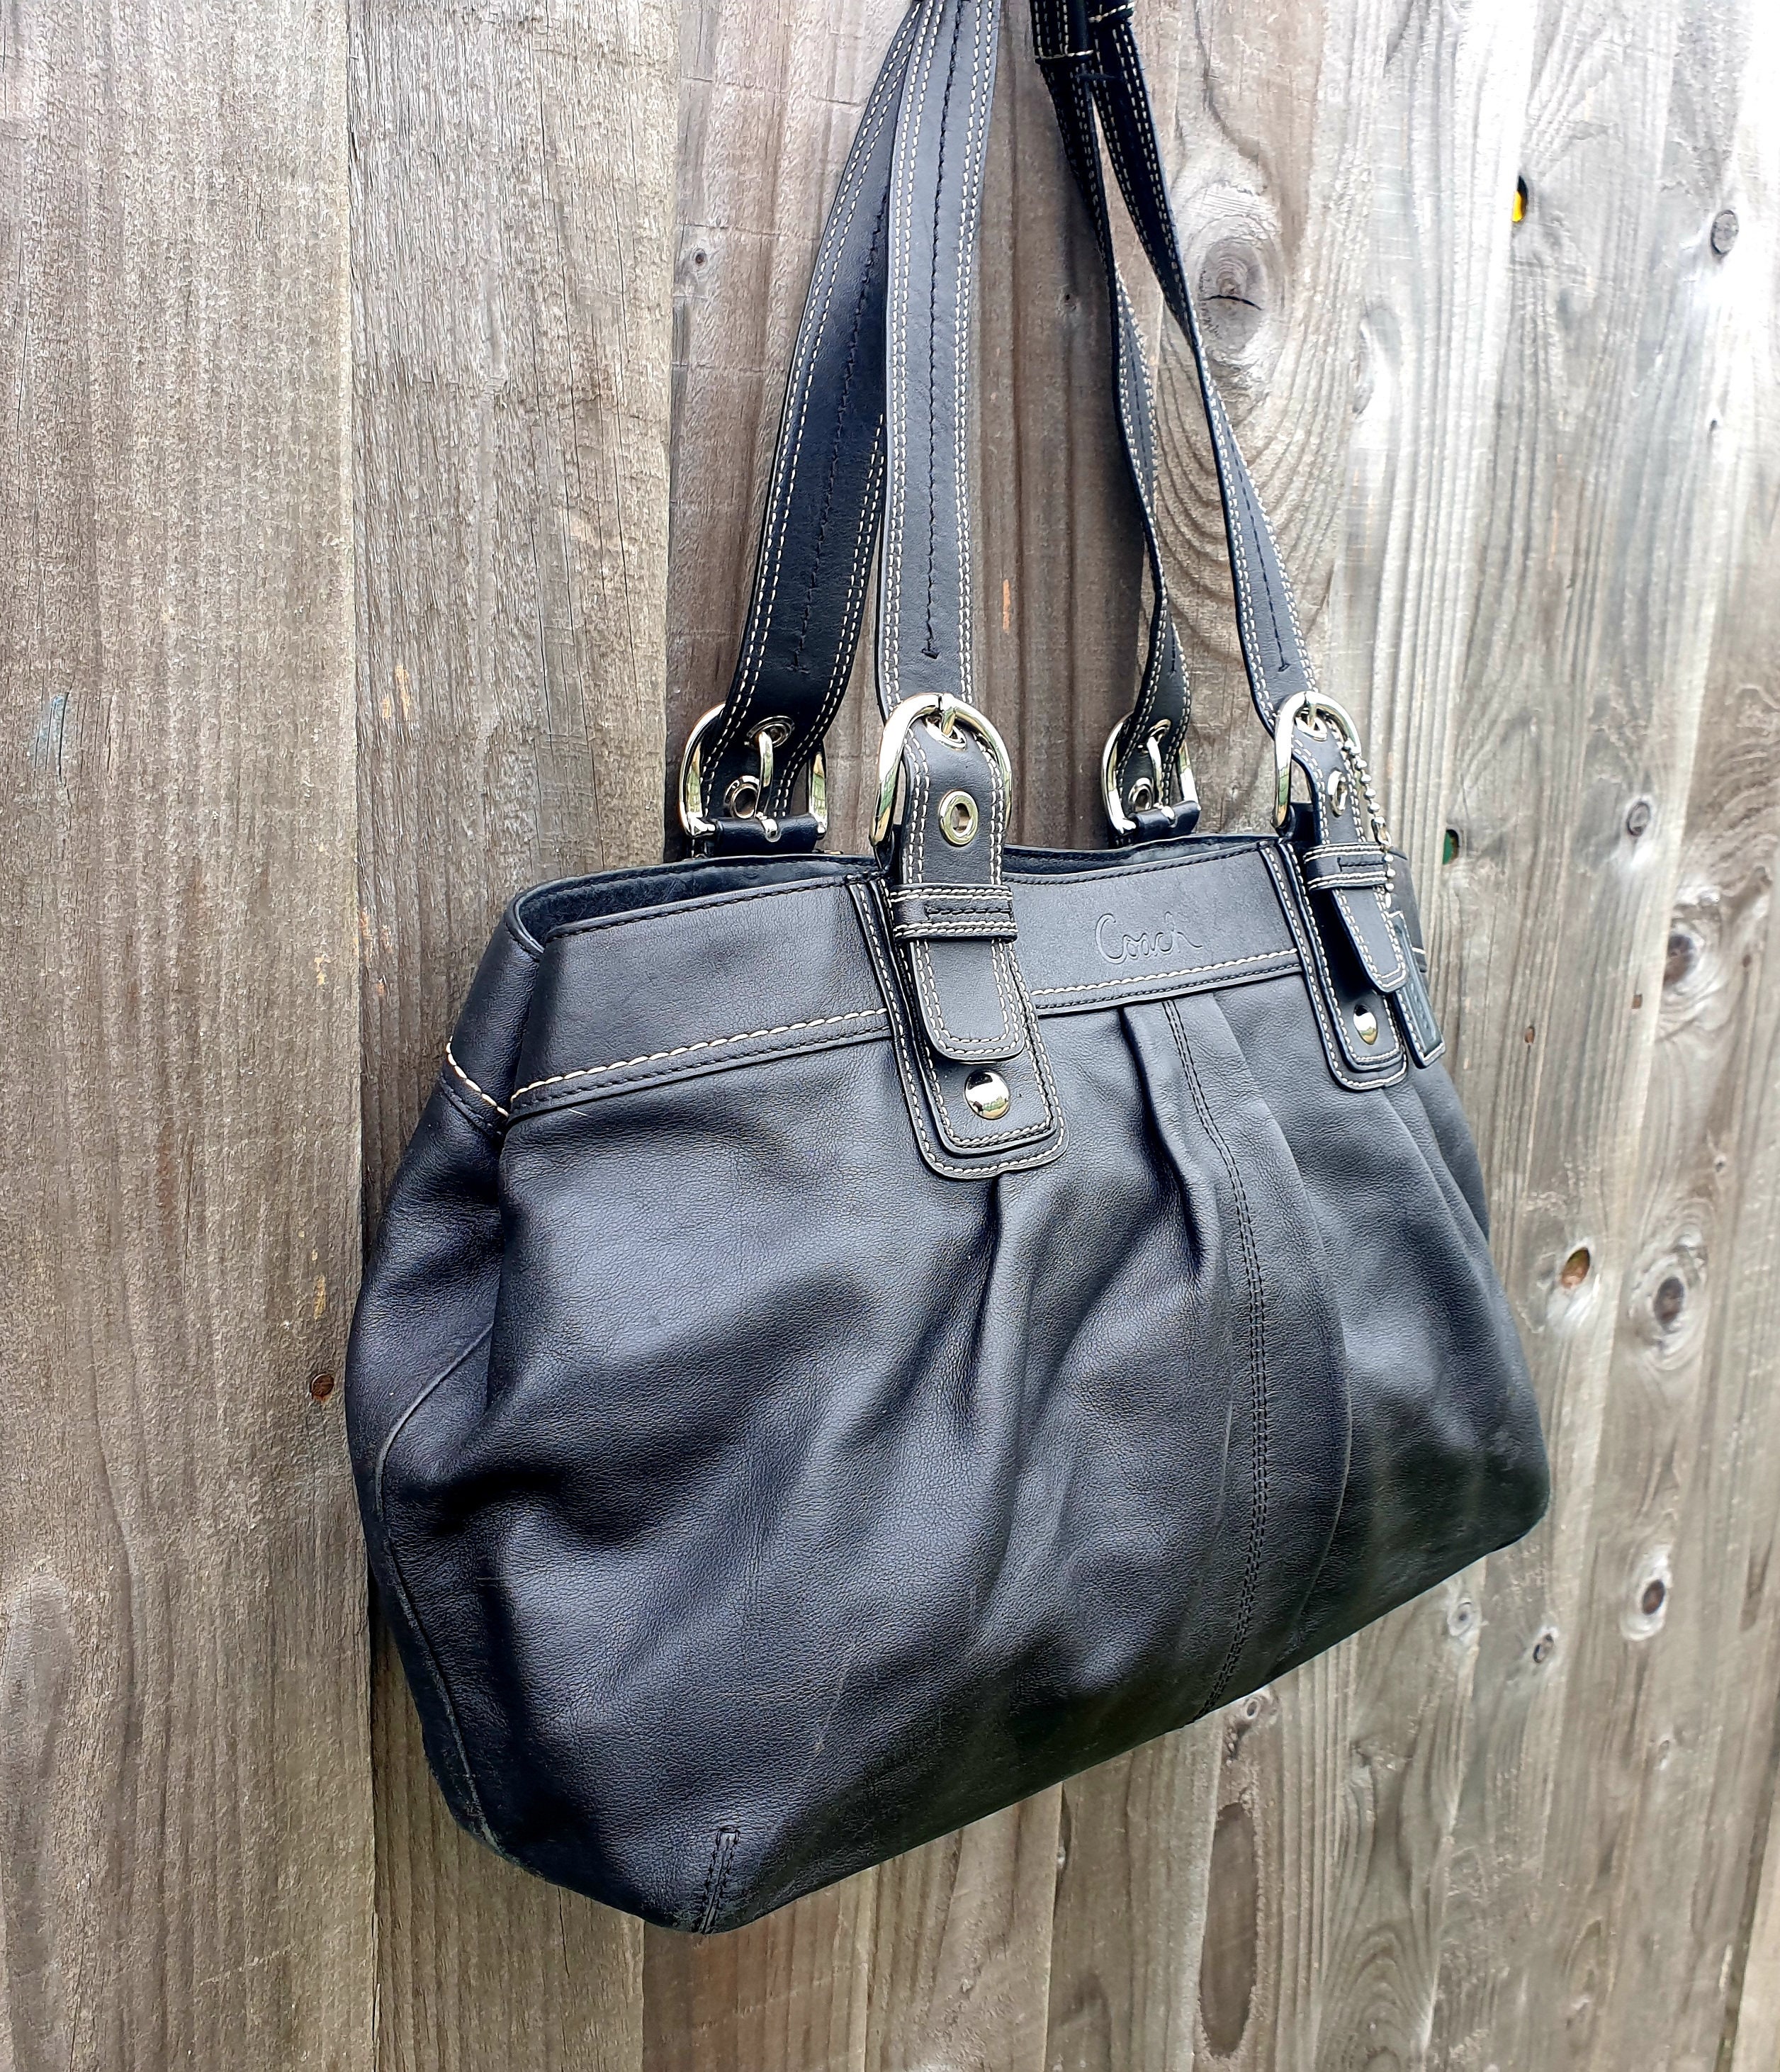 Coach Vintage Y2K Soho Shoulder Bag Large Purse Black With Buckles Rare